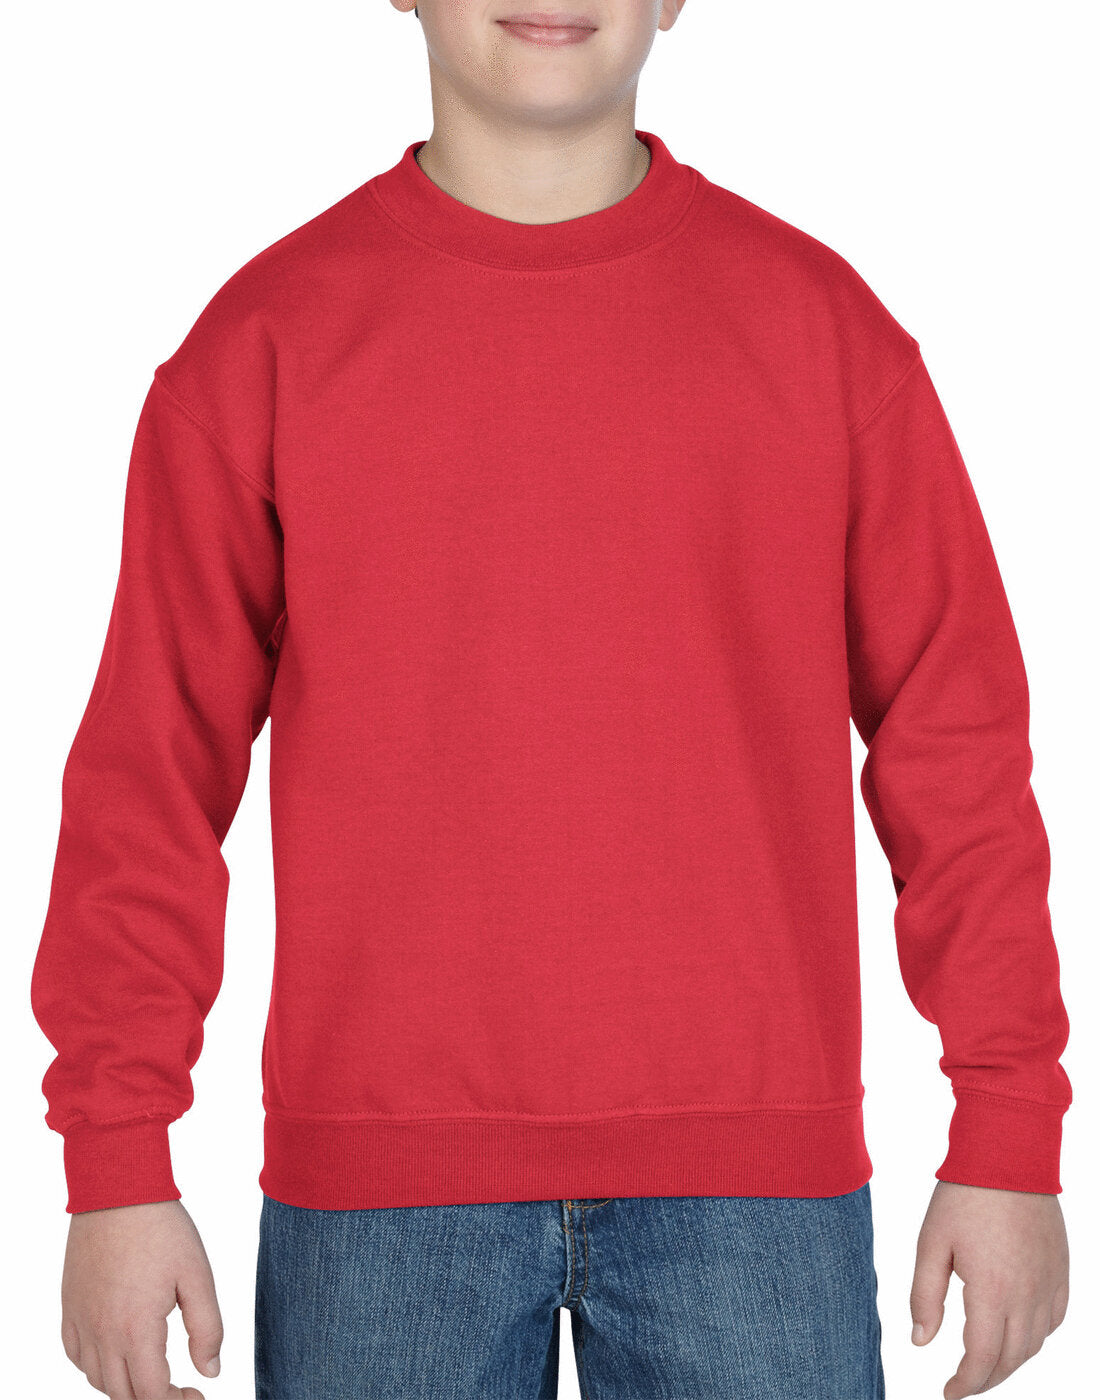 Gildan Kids Heavyblend Crew Neck Sweatshirt - Red